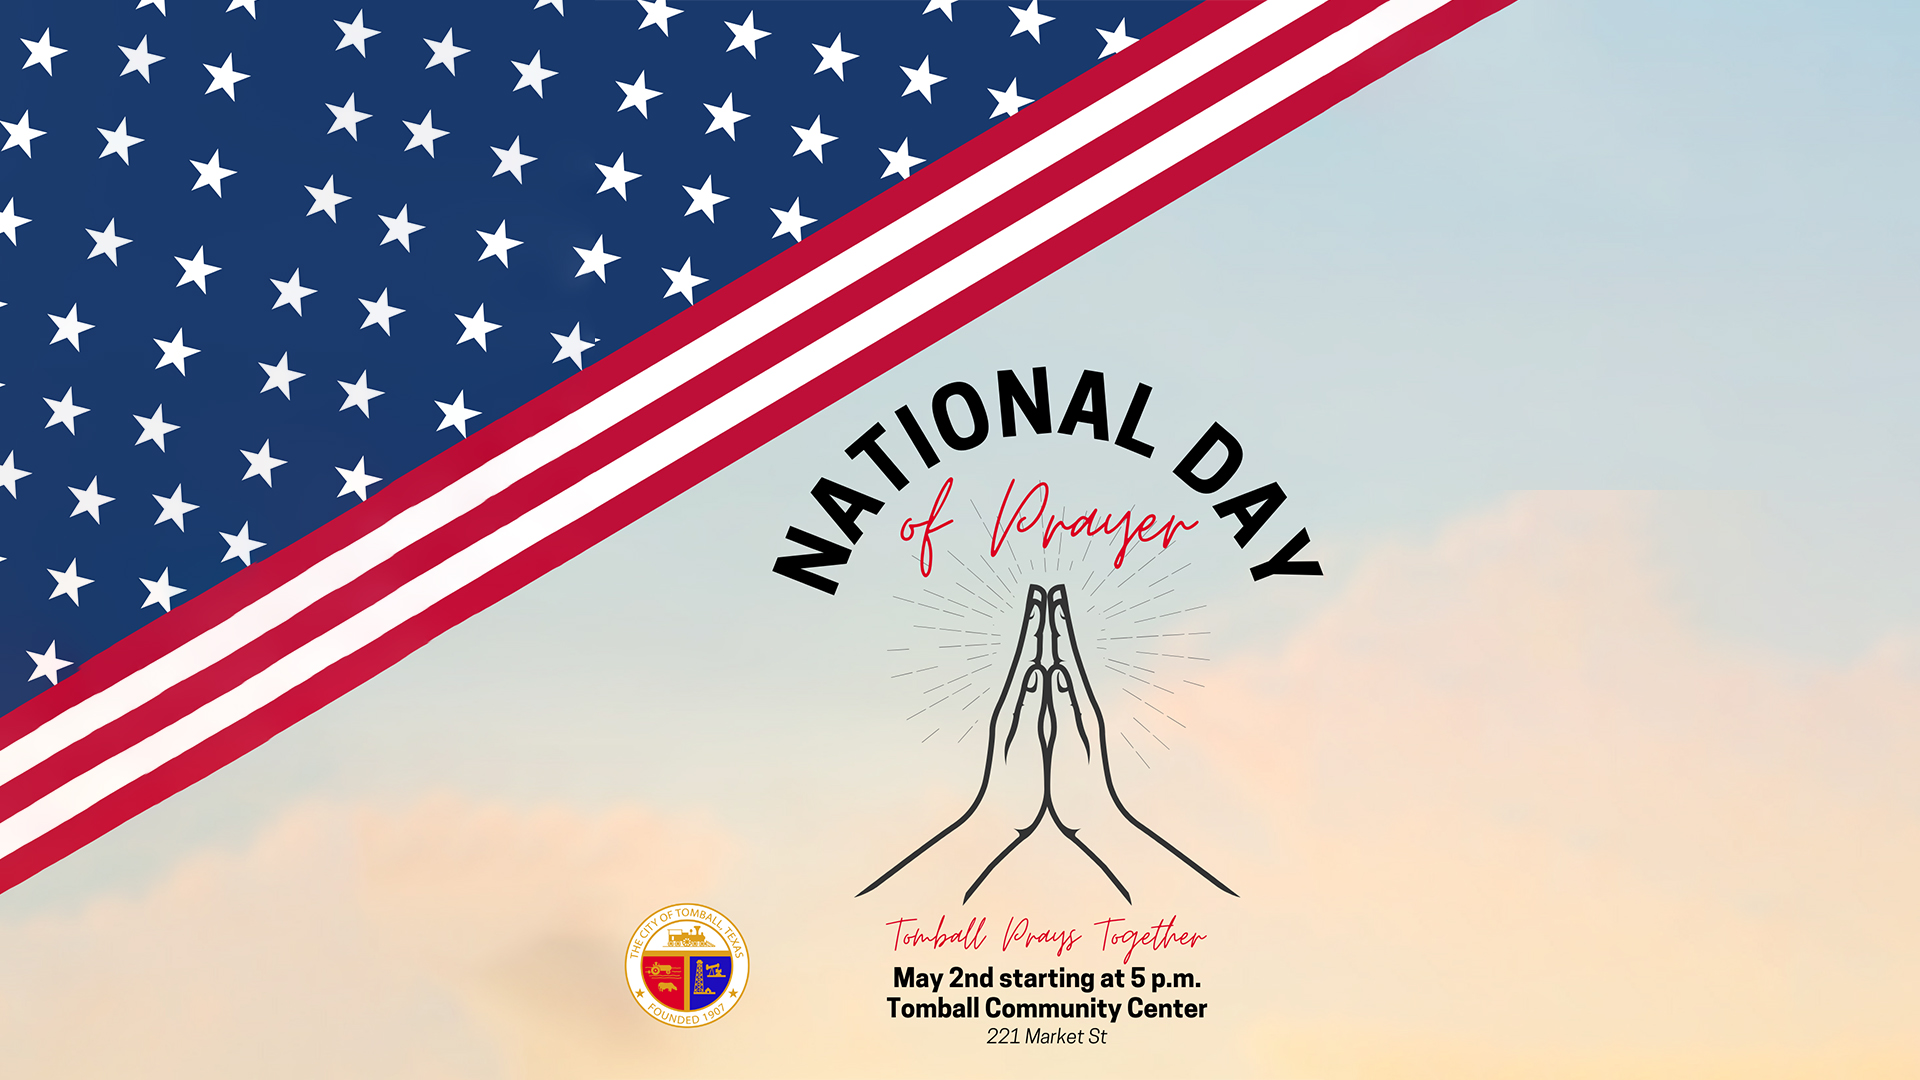 National Day of Prayer image